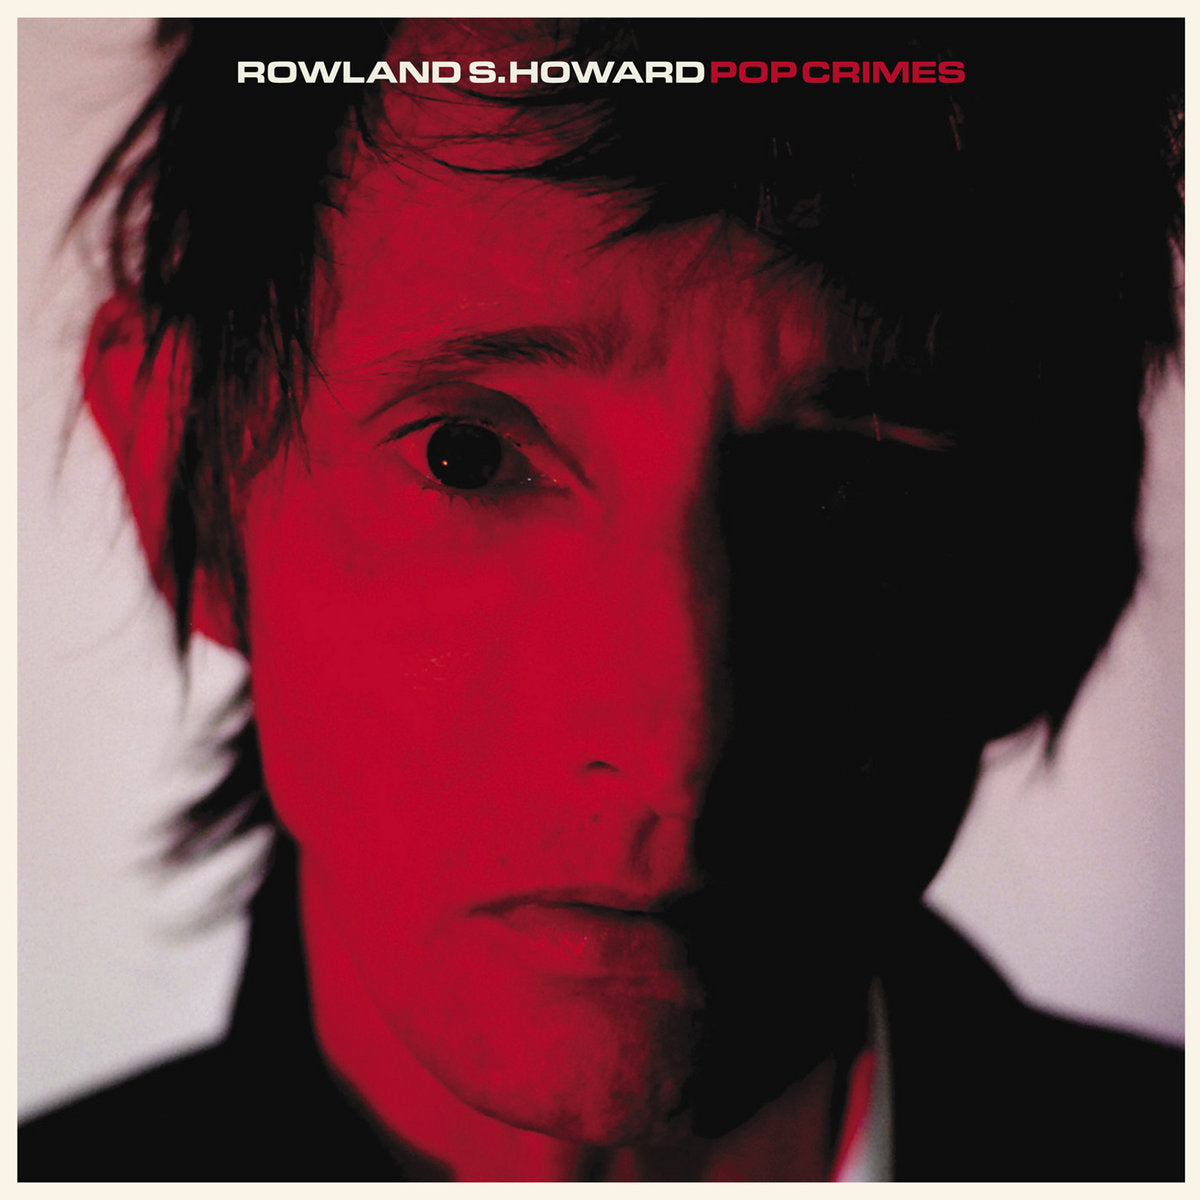 Roland S Howard - Pop Crimes